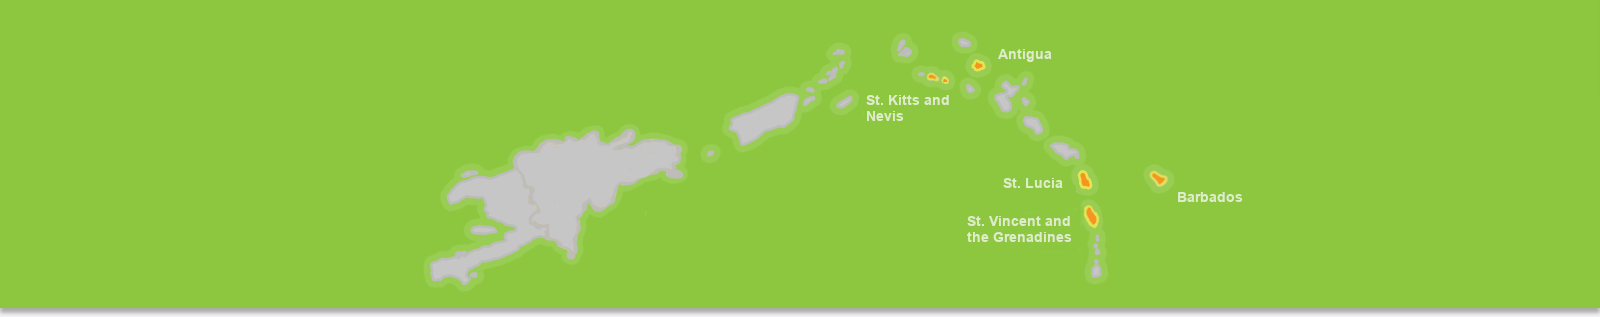 Caribbean islands map